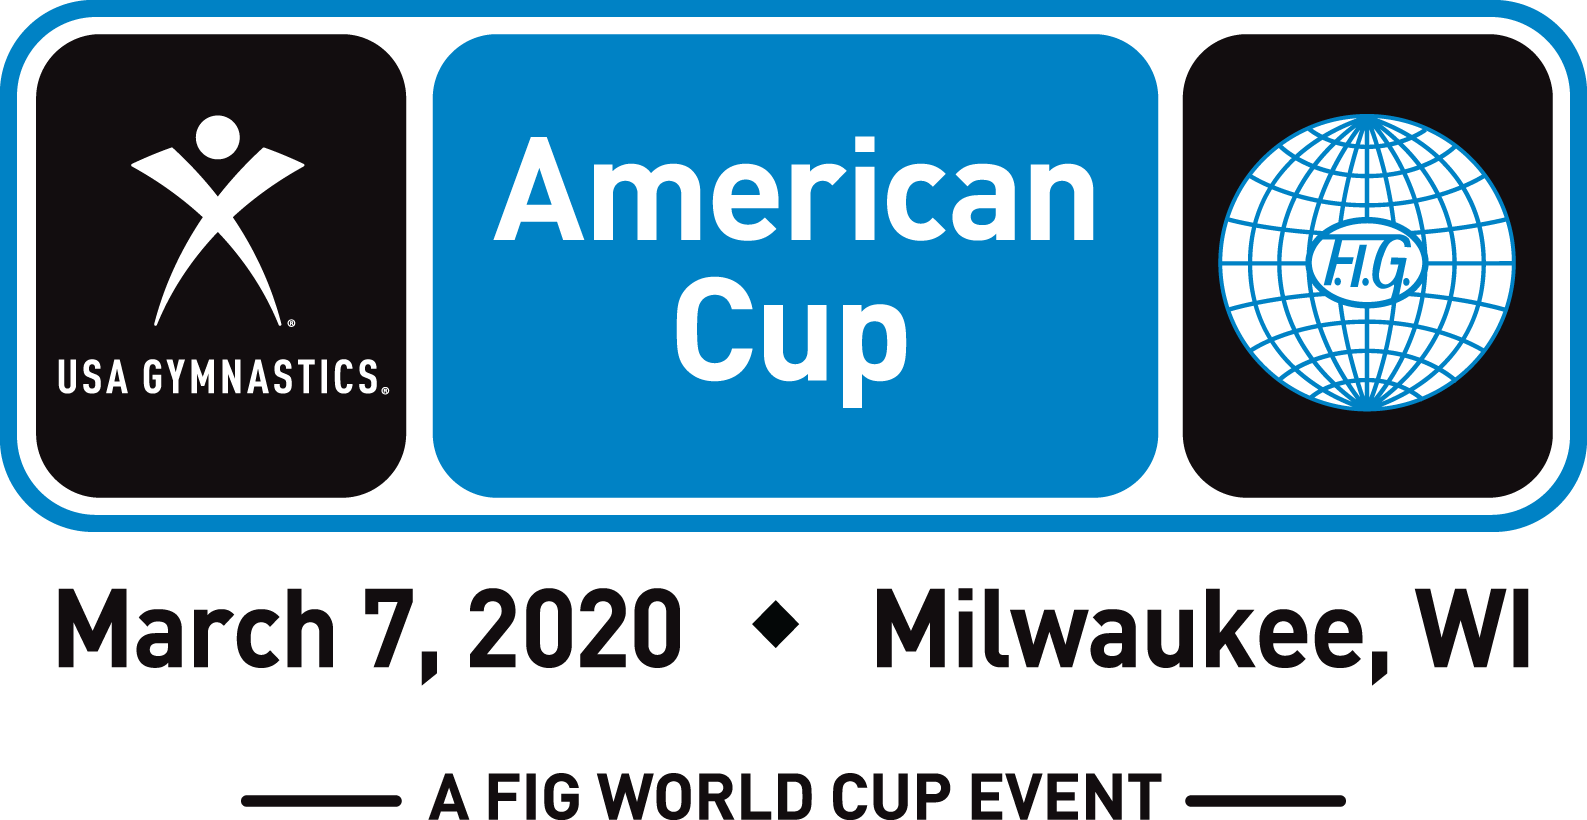 American Cup logo